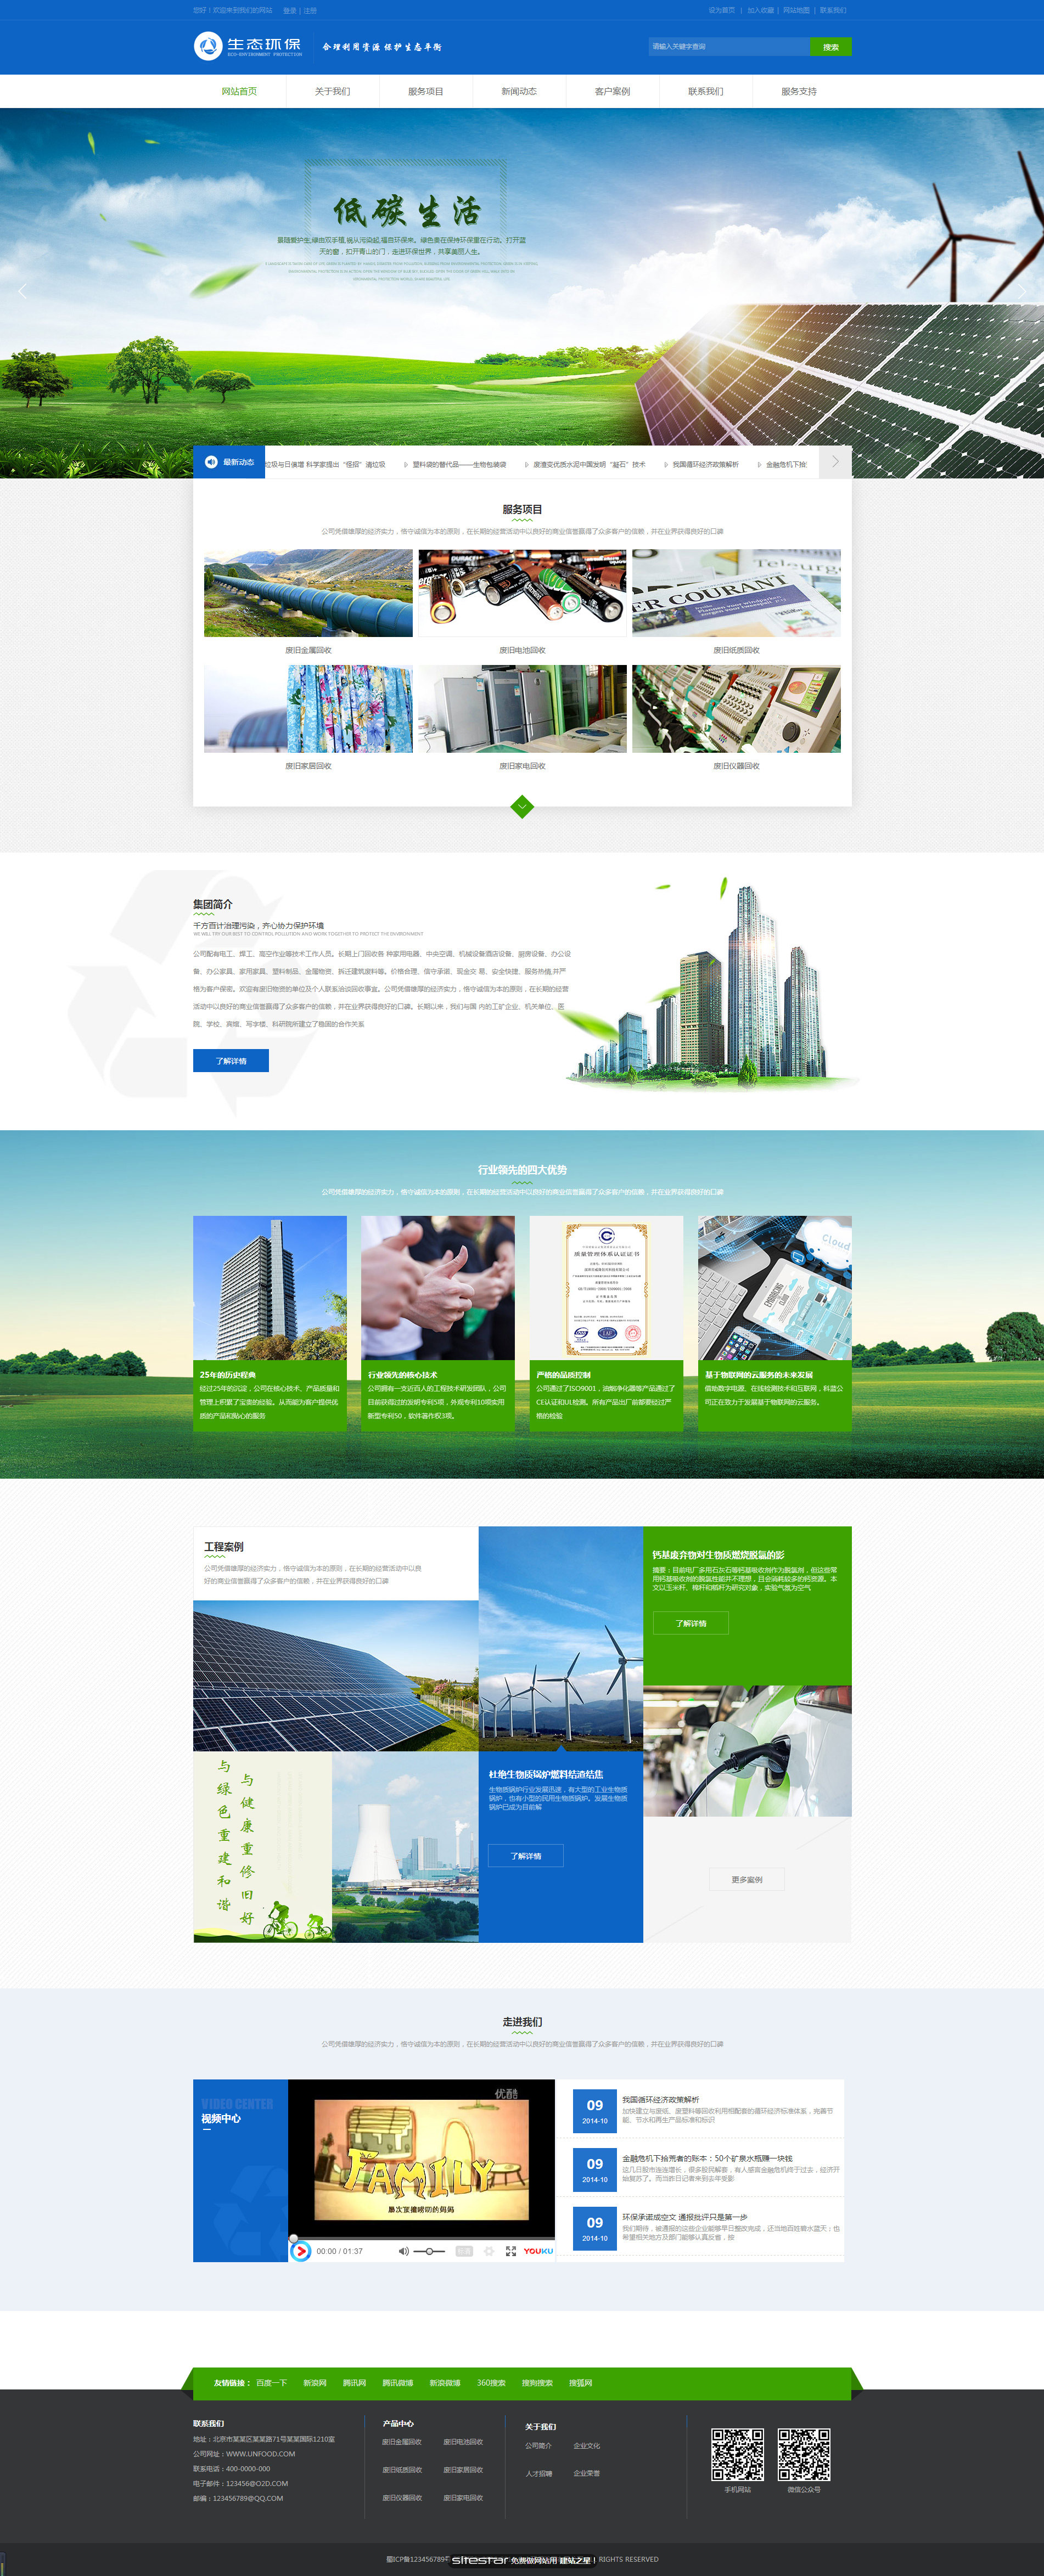 环保网站模板-environment-1229671